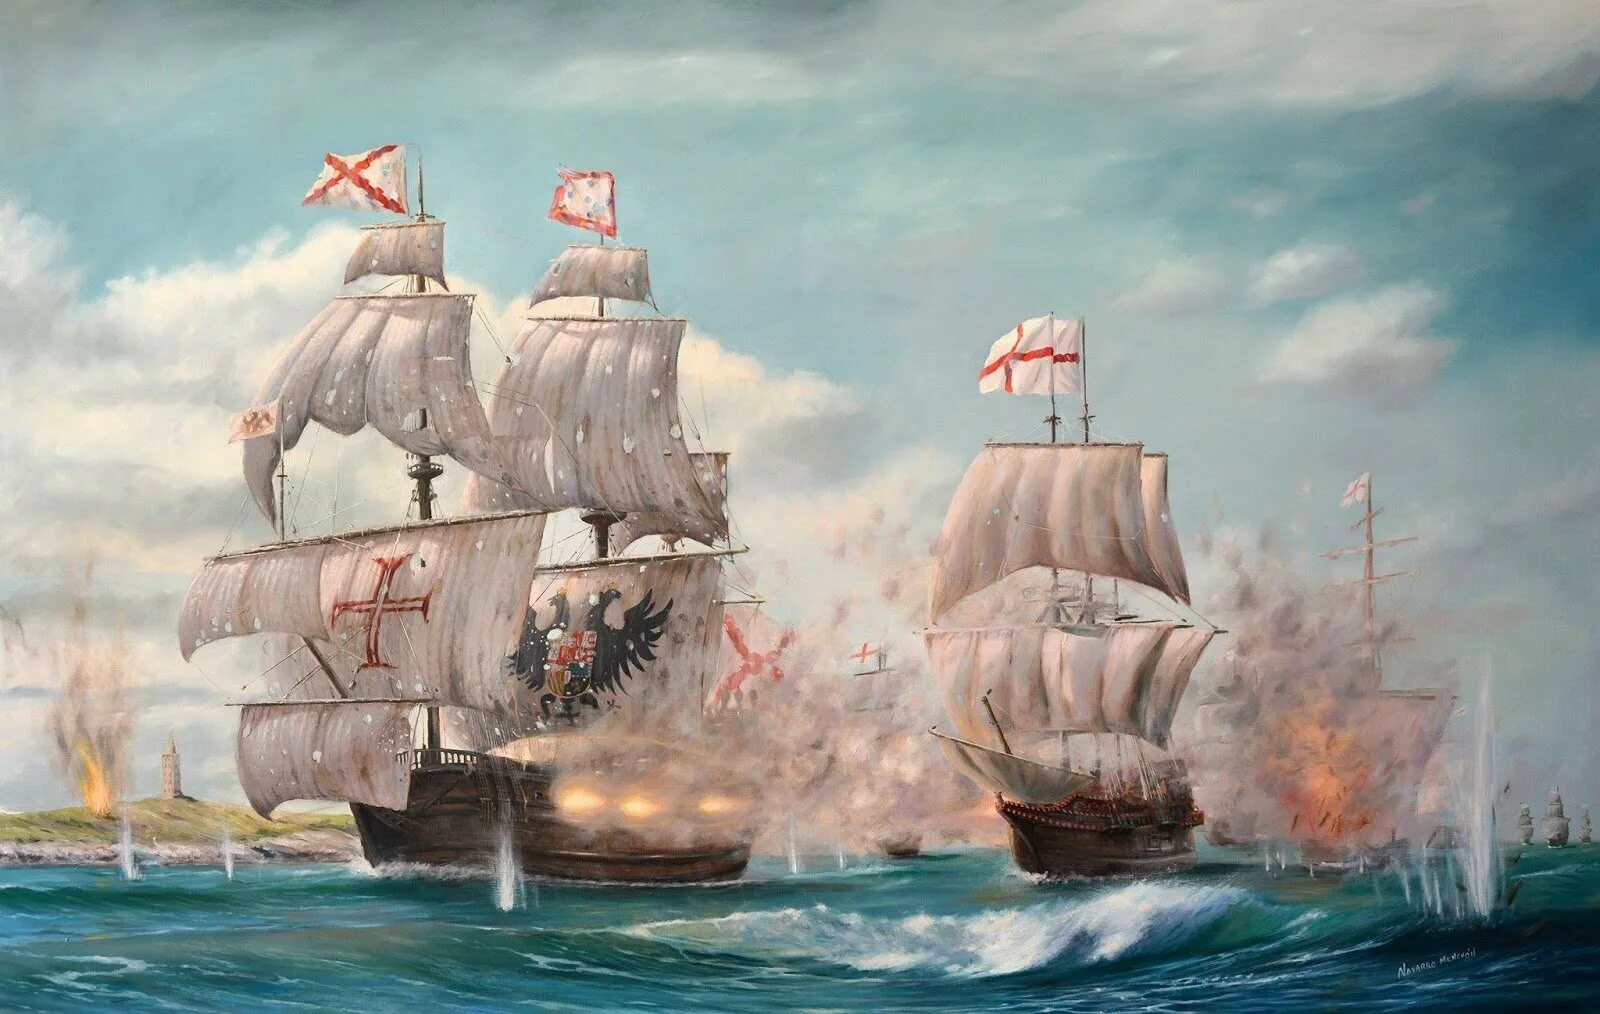 Фрэнсис Дрейк и непобедимая Армада. Испанская непобедимая Армада 1588. Испанская Армада 1588 флот. Испанская Армада 1588 ф\лот.